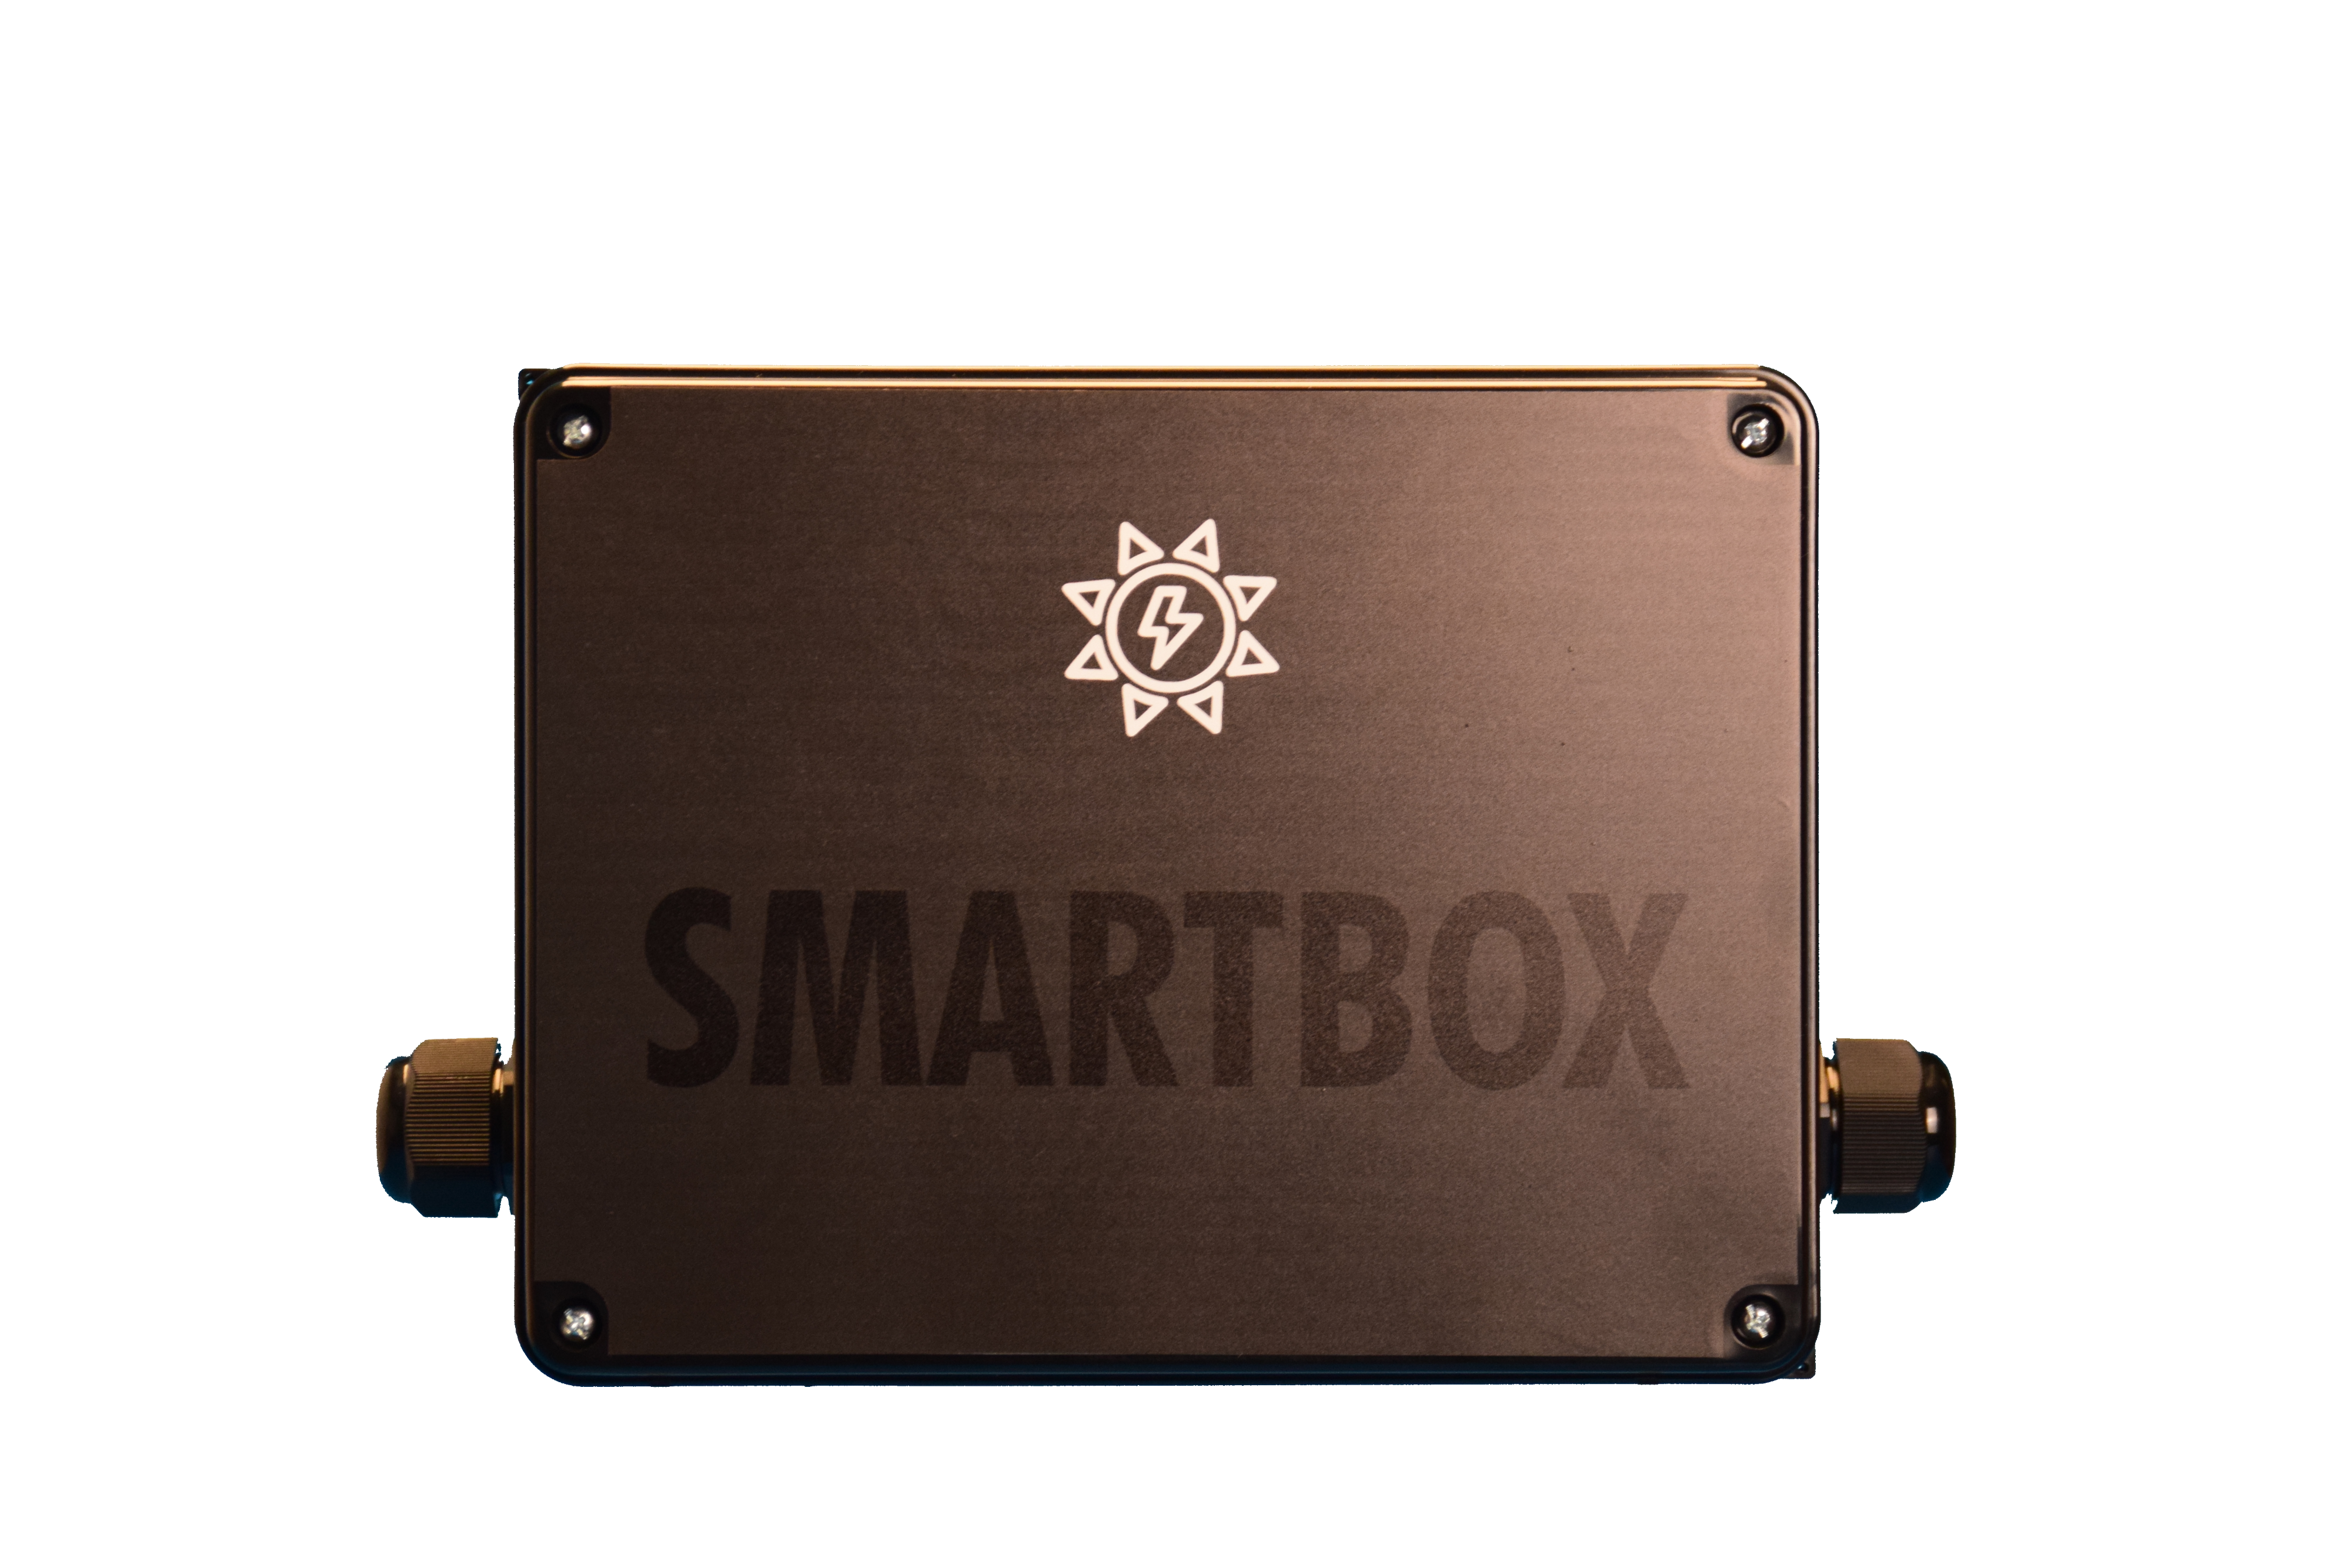 Smartbox 11 / 22 KW - Makes your "dumb" wallbox intelligent -